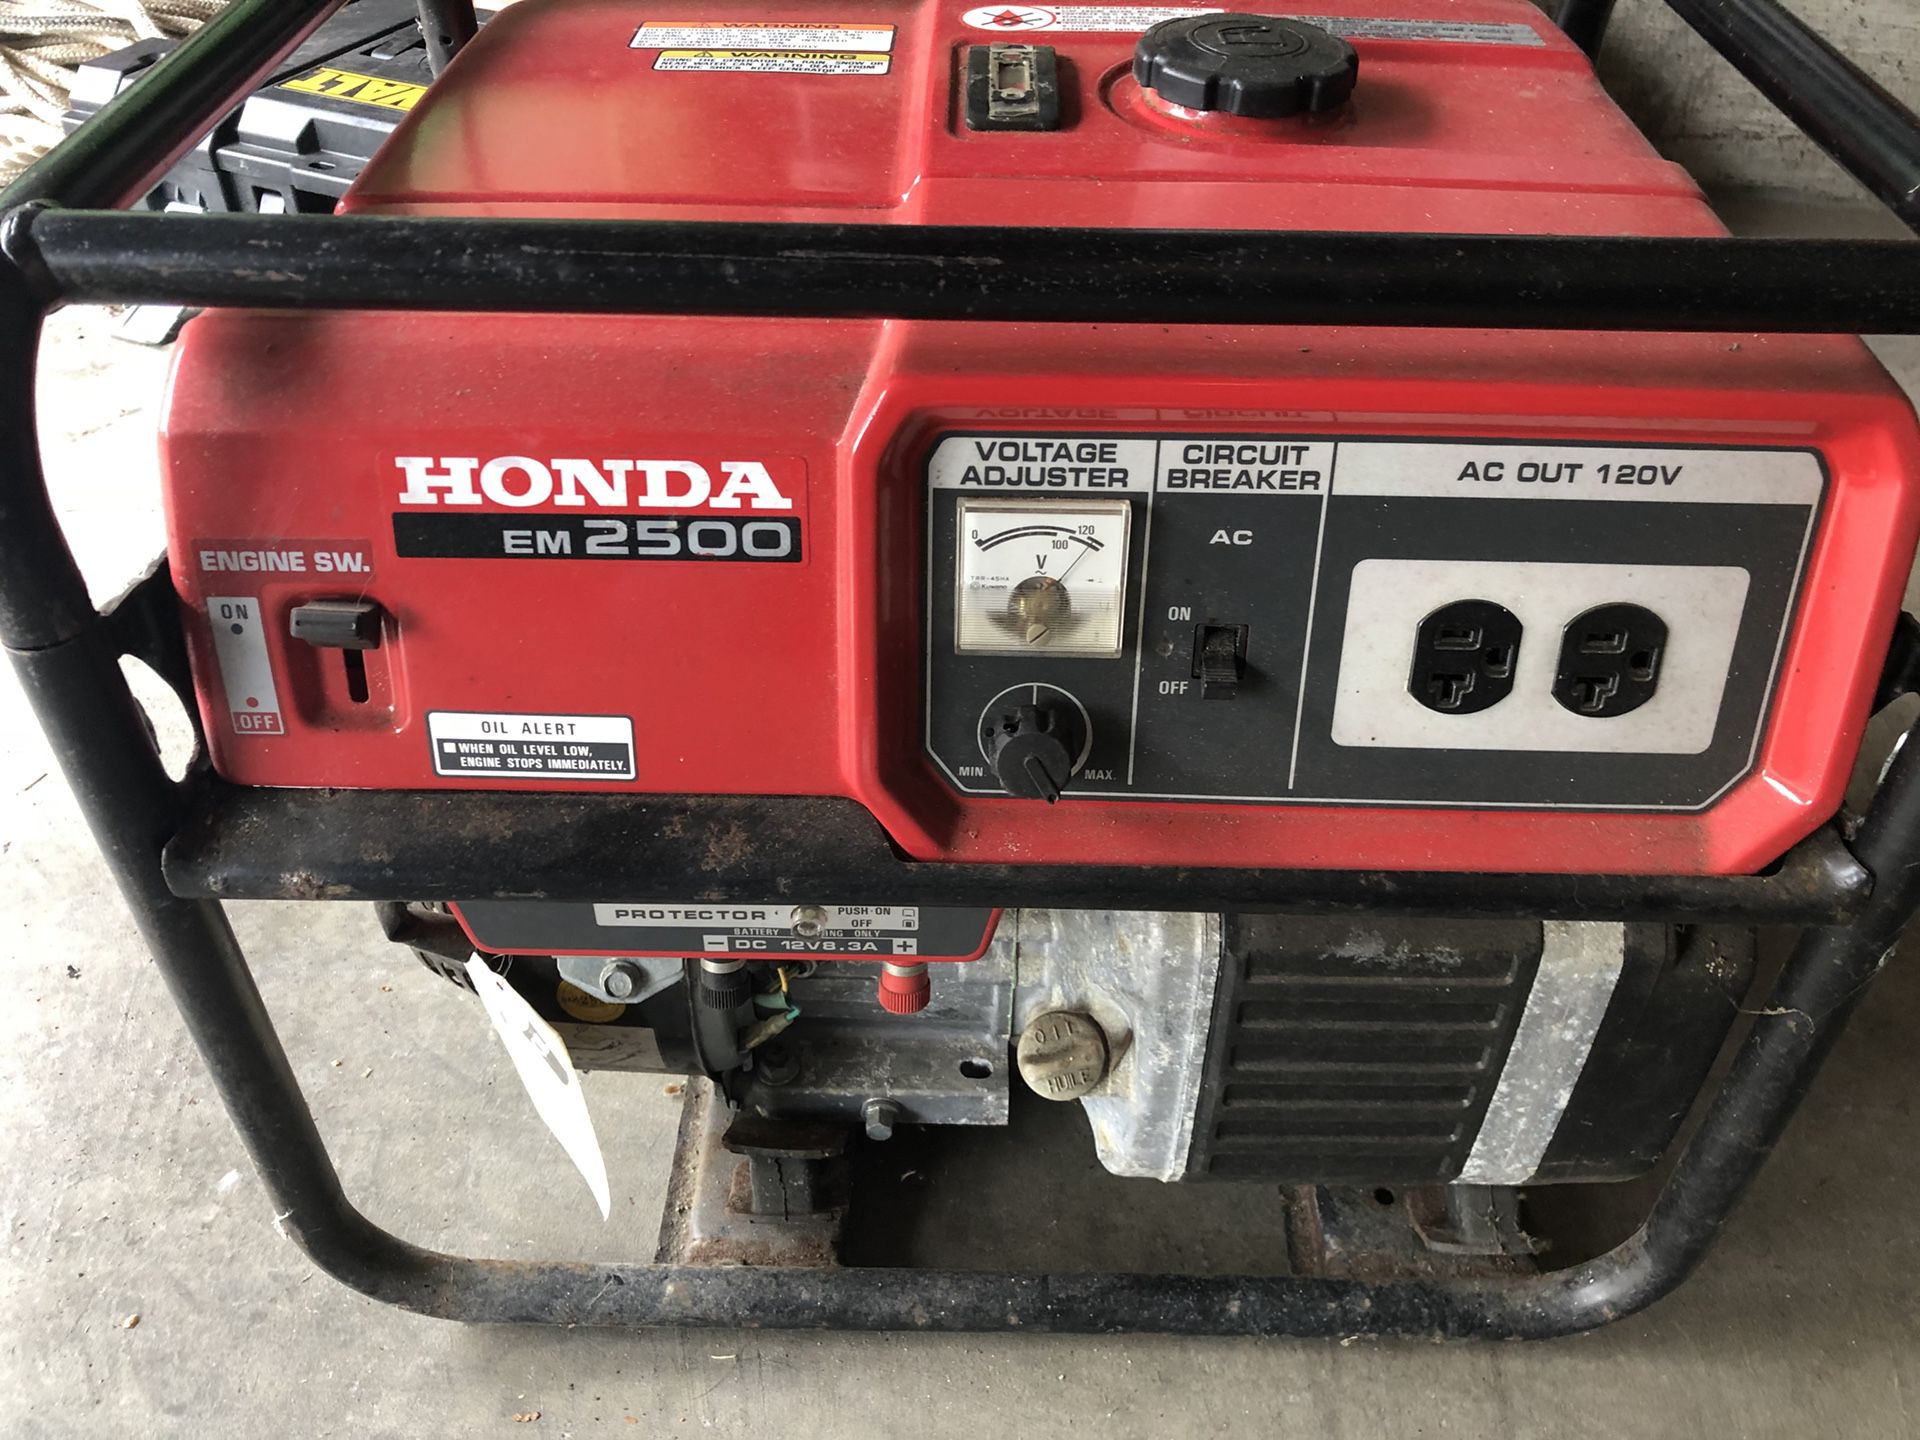 Honda EM 2500 Generator